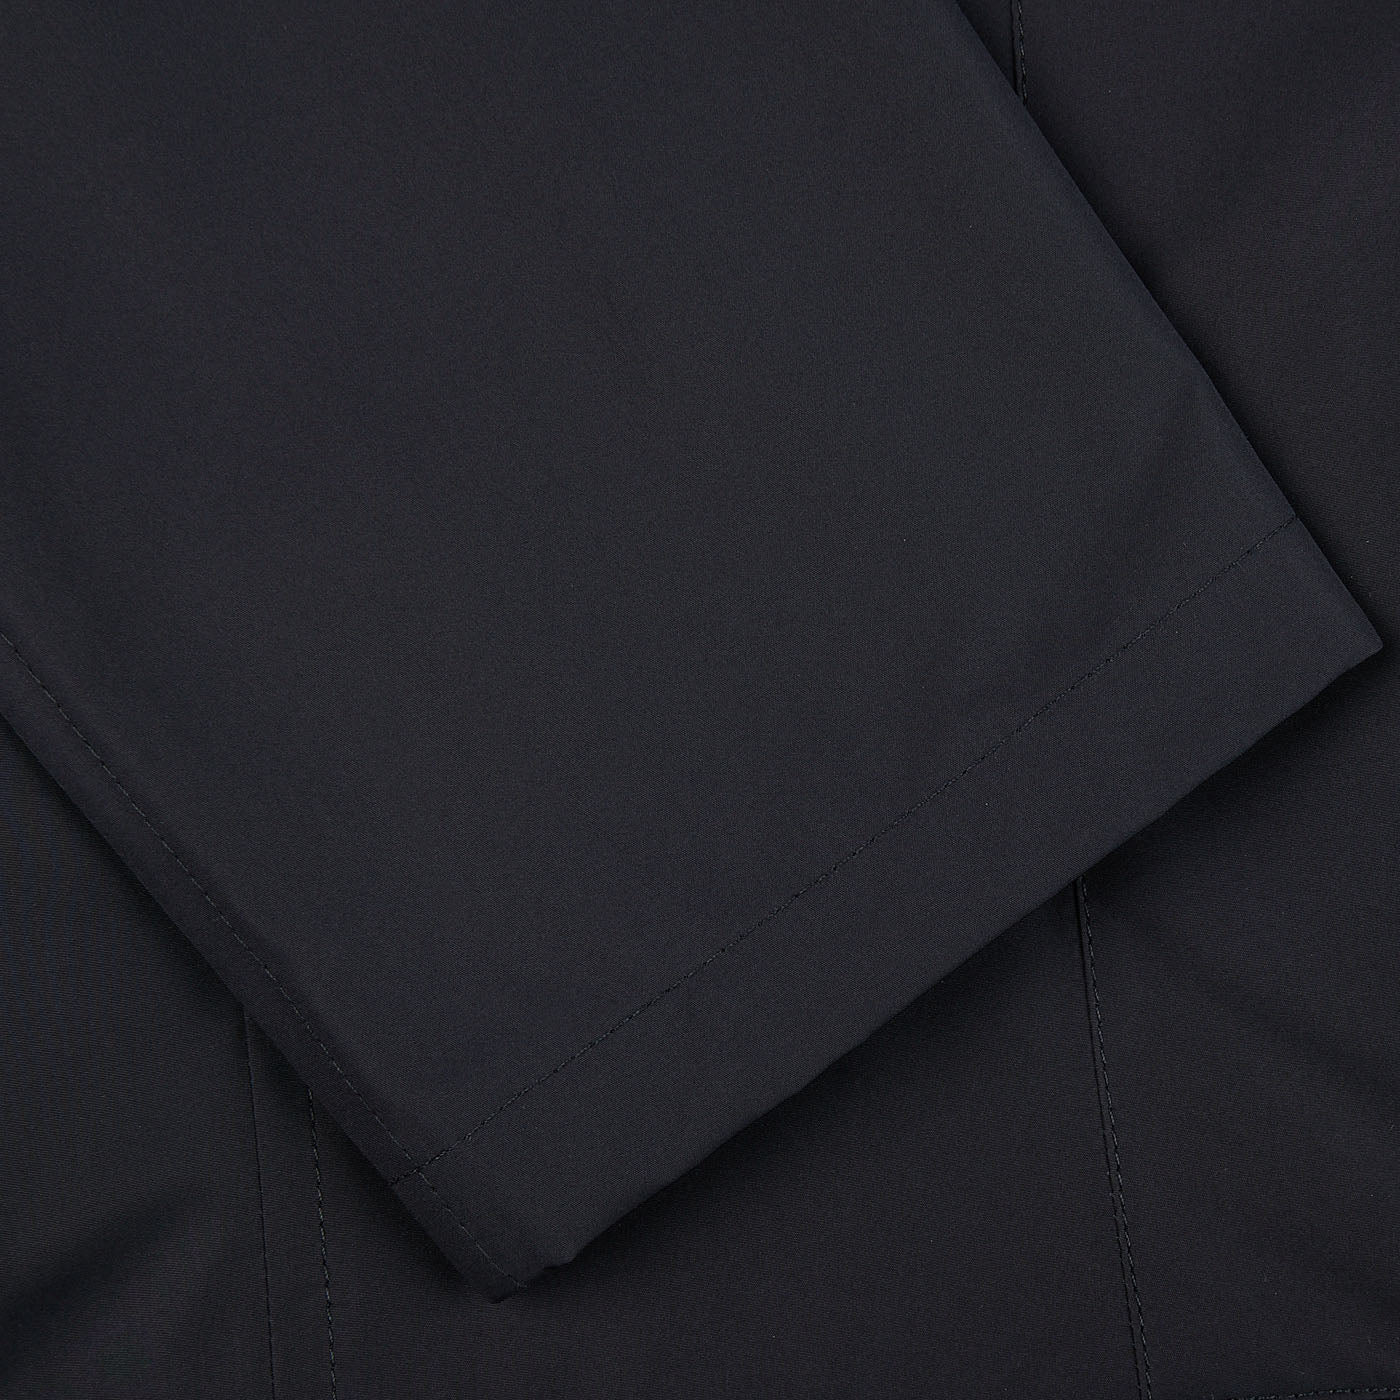 A close up of the pocket of a Herno Navy Blue Nylon Hybrid Blazer.